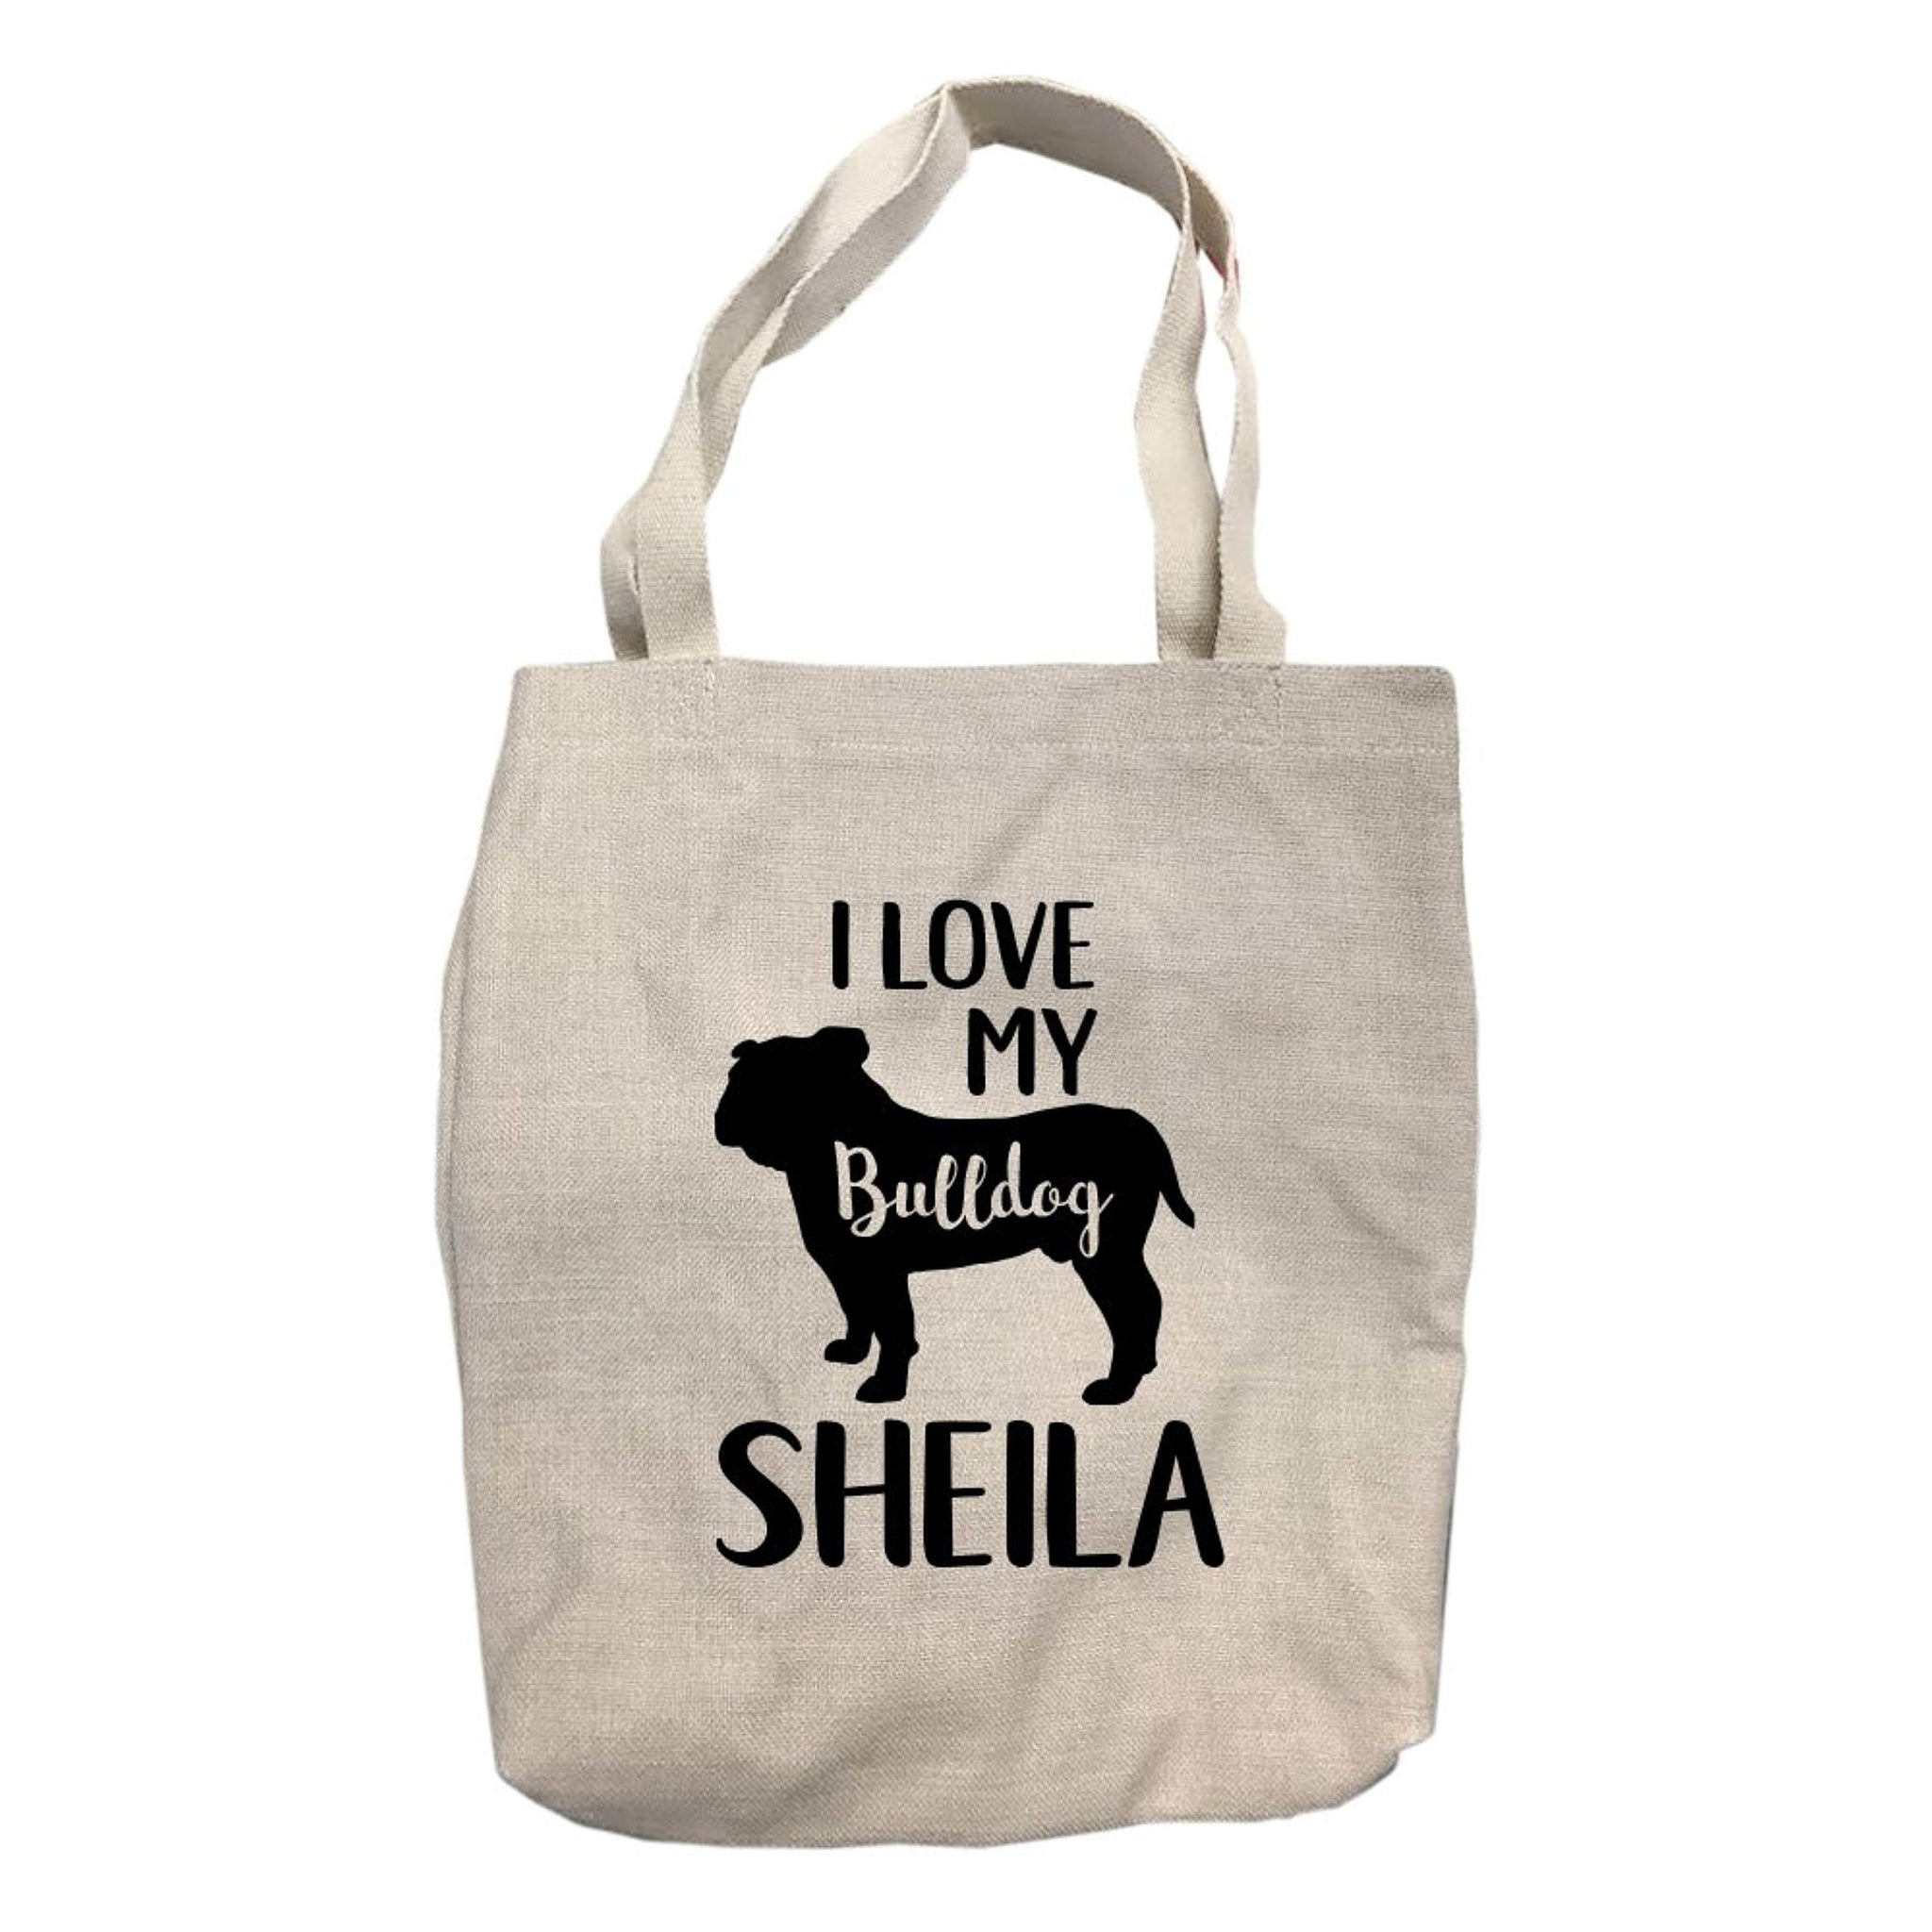 Personalized I Love My Bulldog Tote Bag